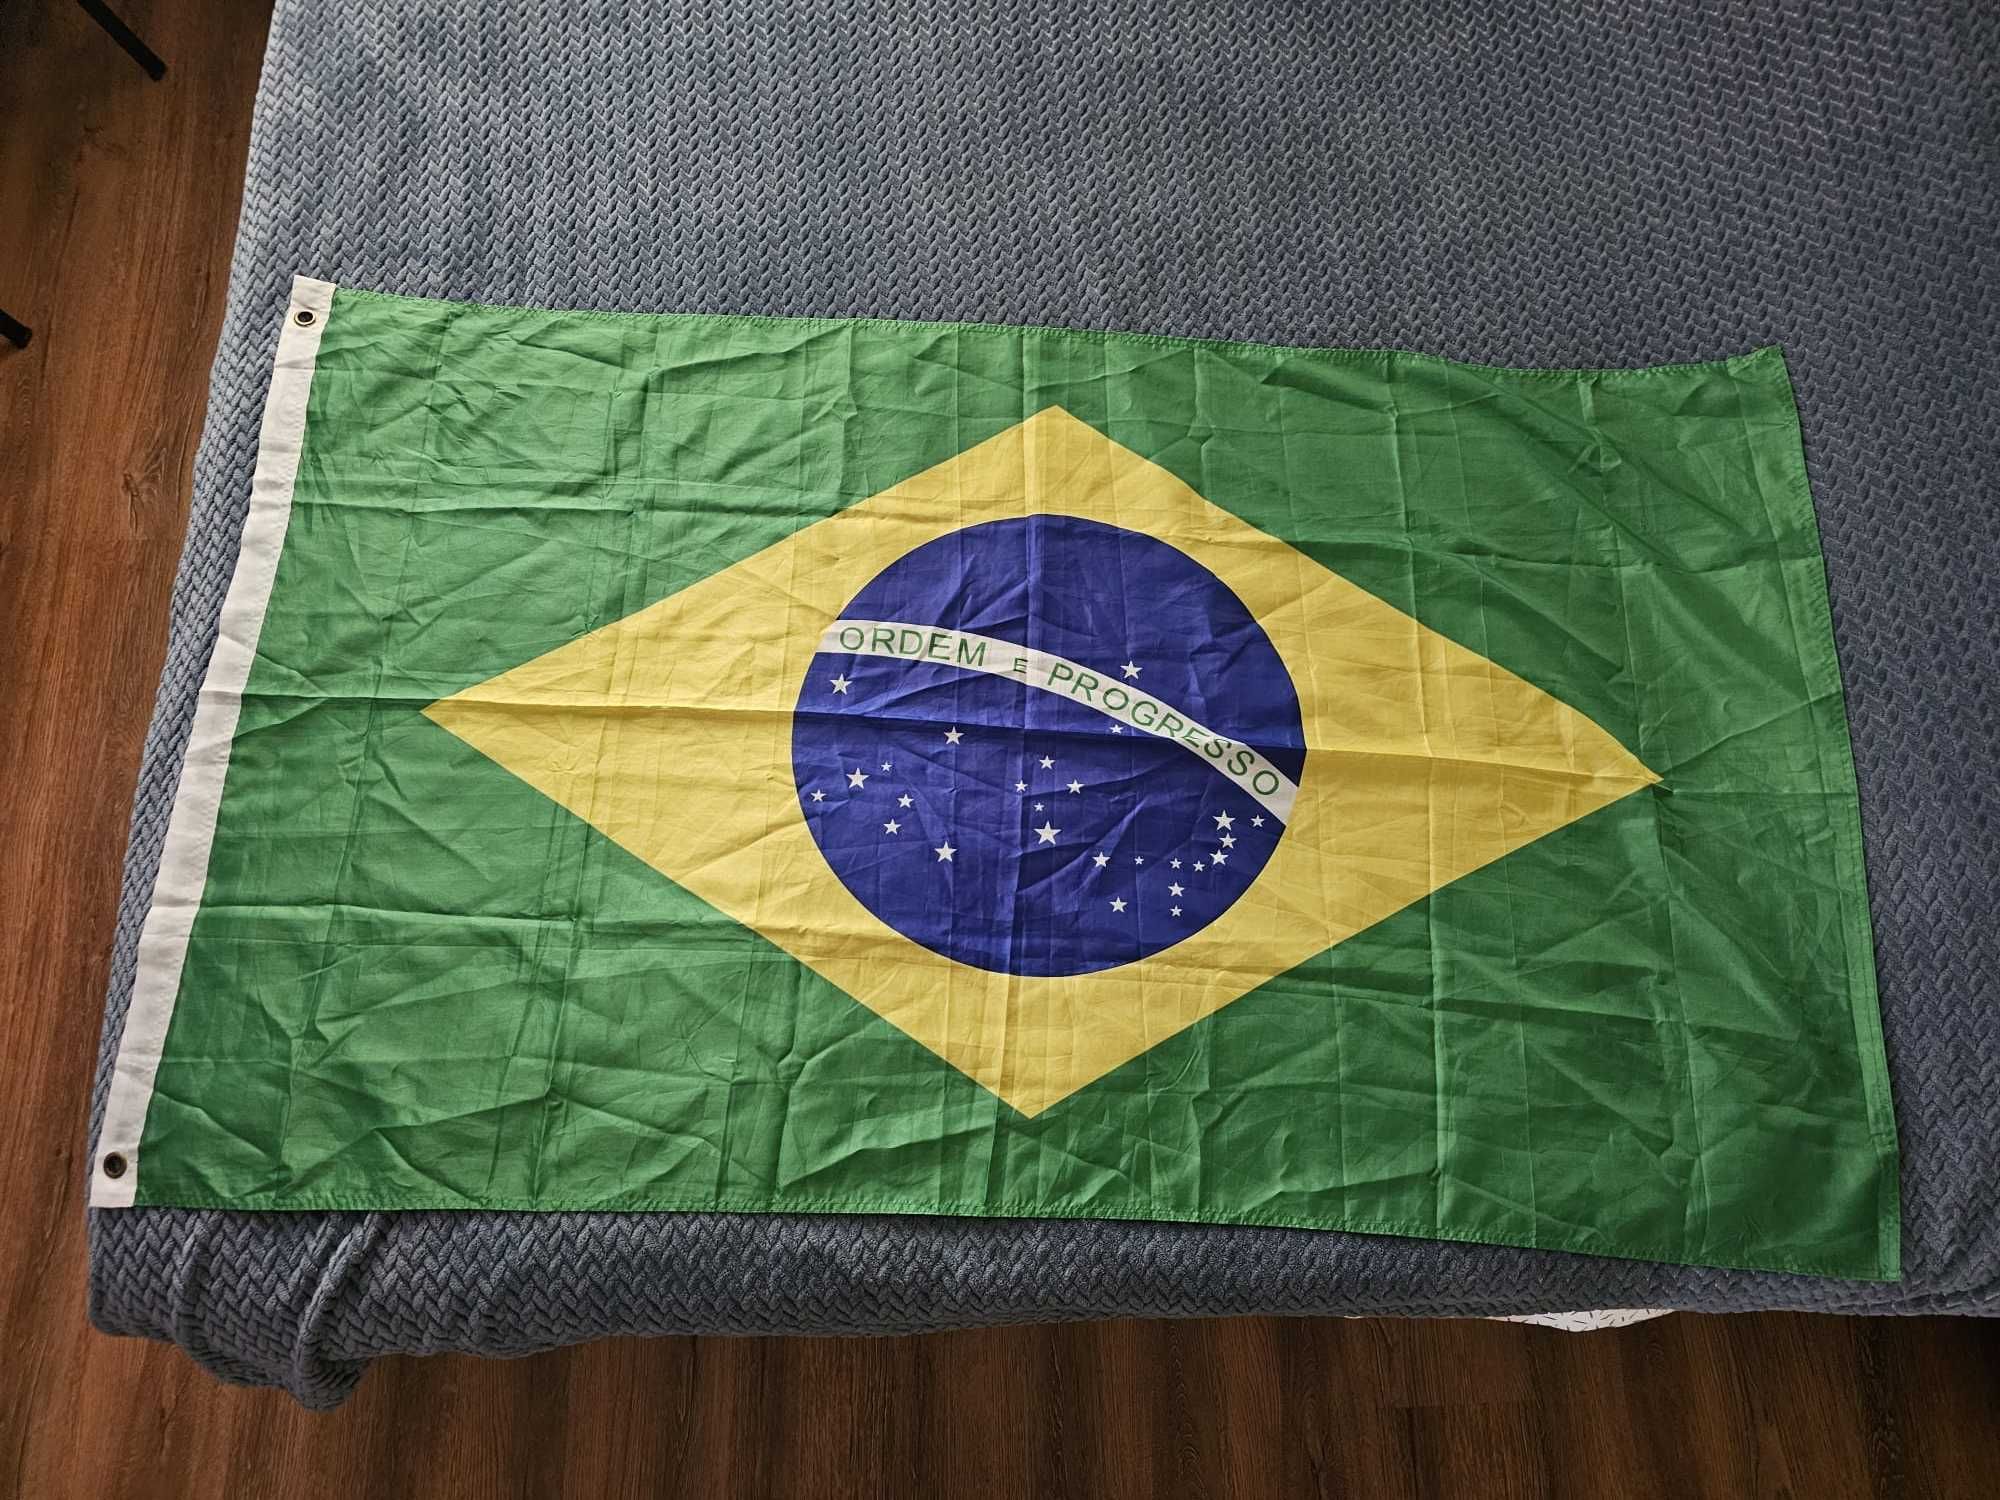 Steag Brazilia dimensiuni mari